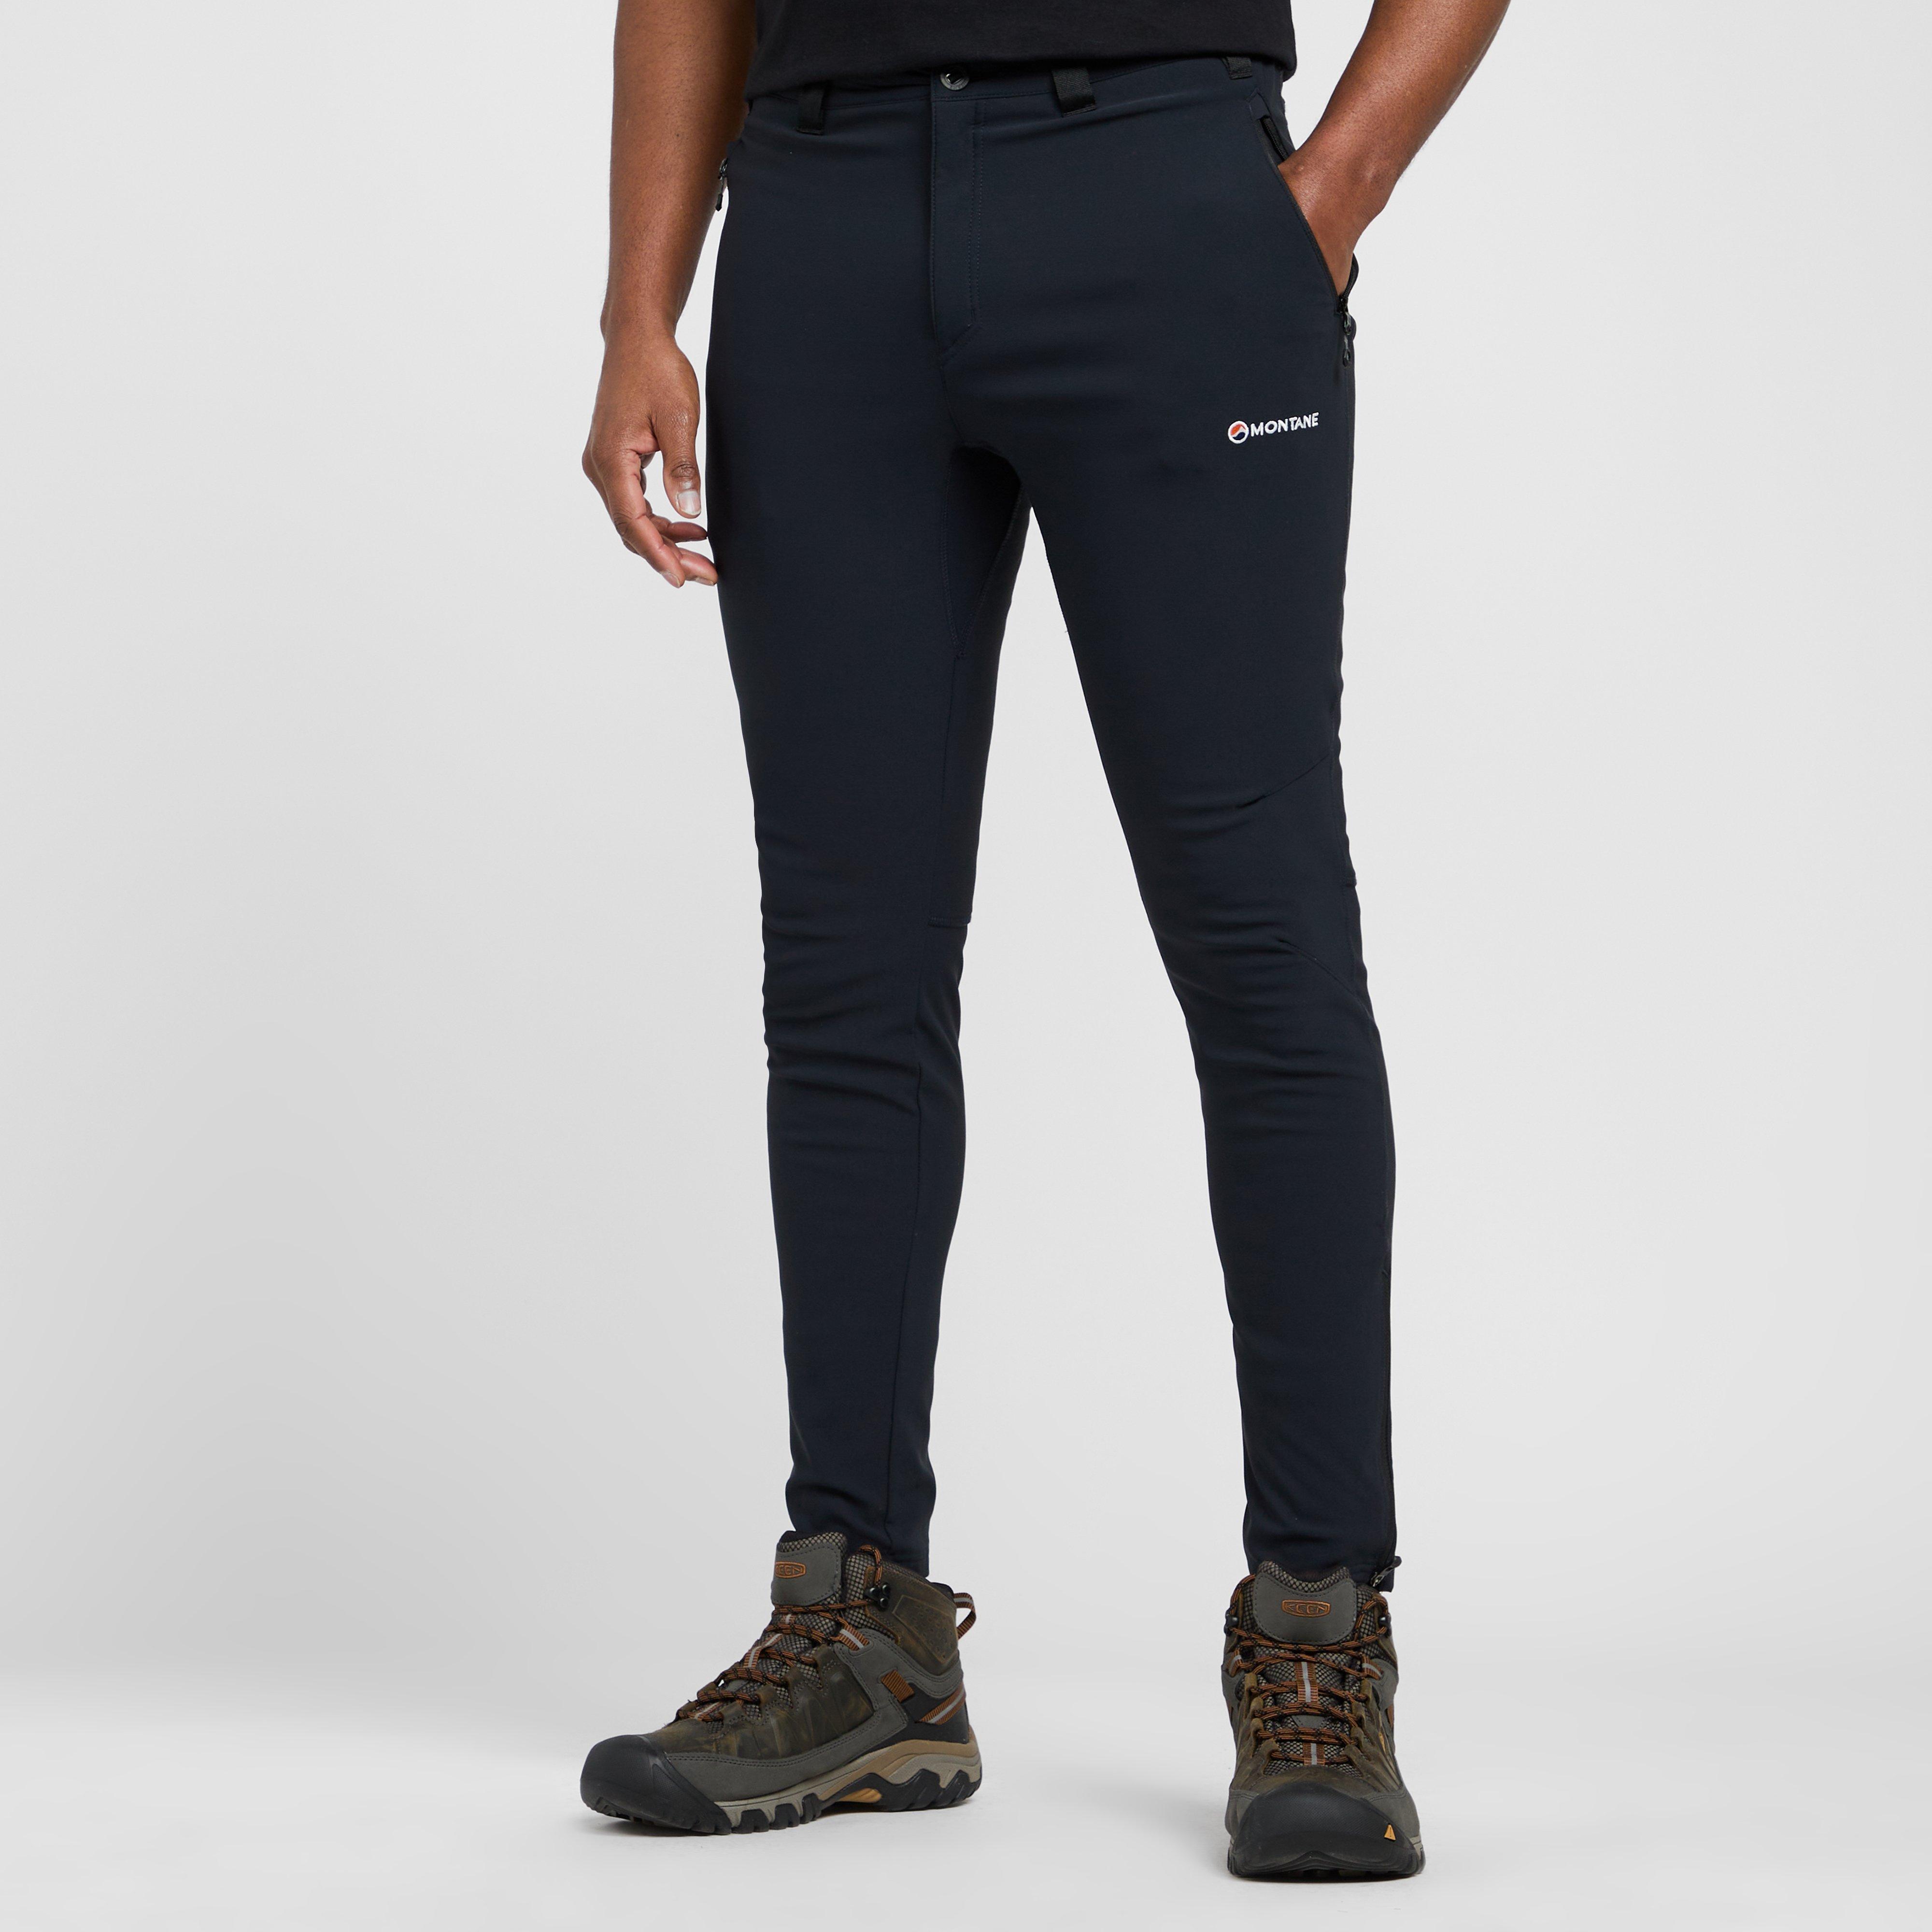 Image of Montane Men's Mode Mission Pants - Black/Pants, Black/PANTS